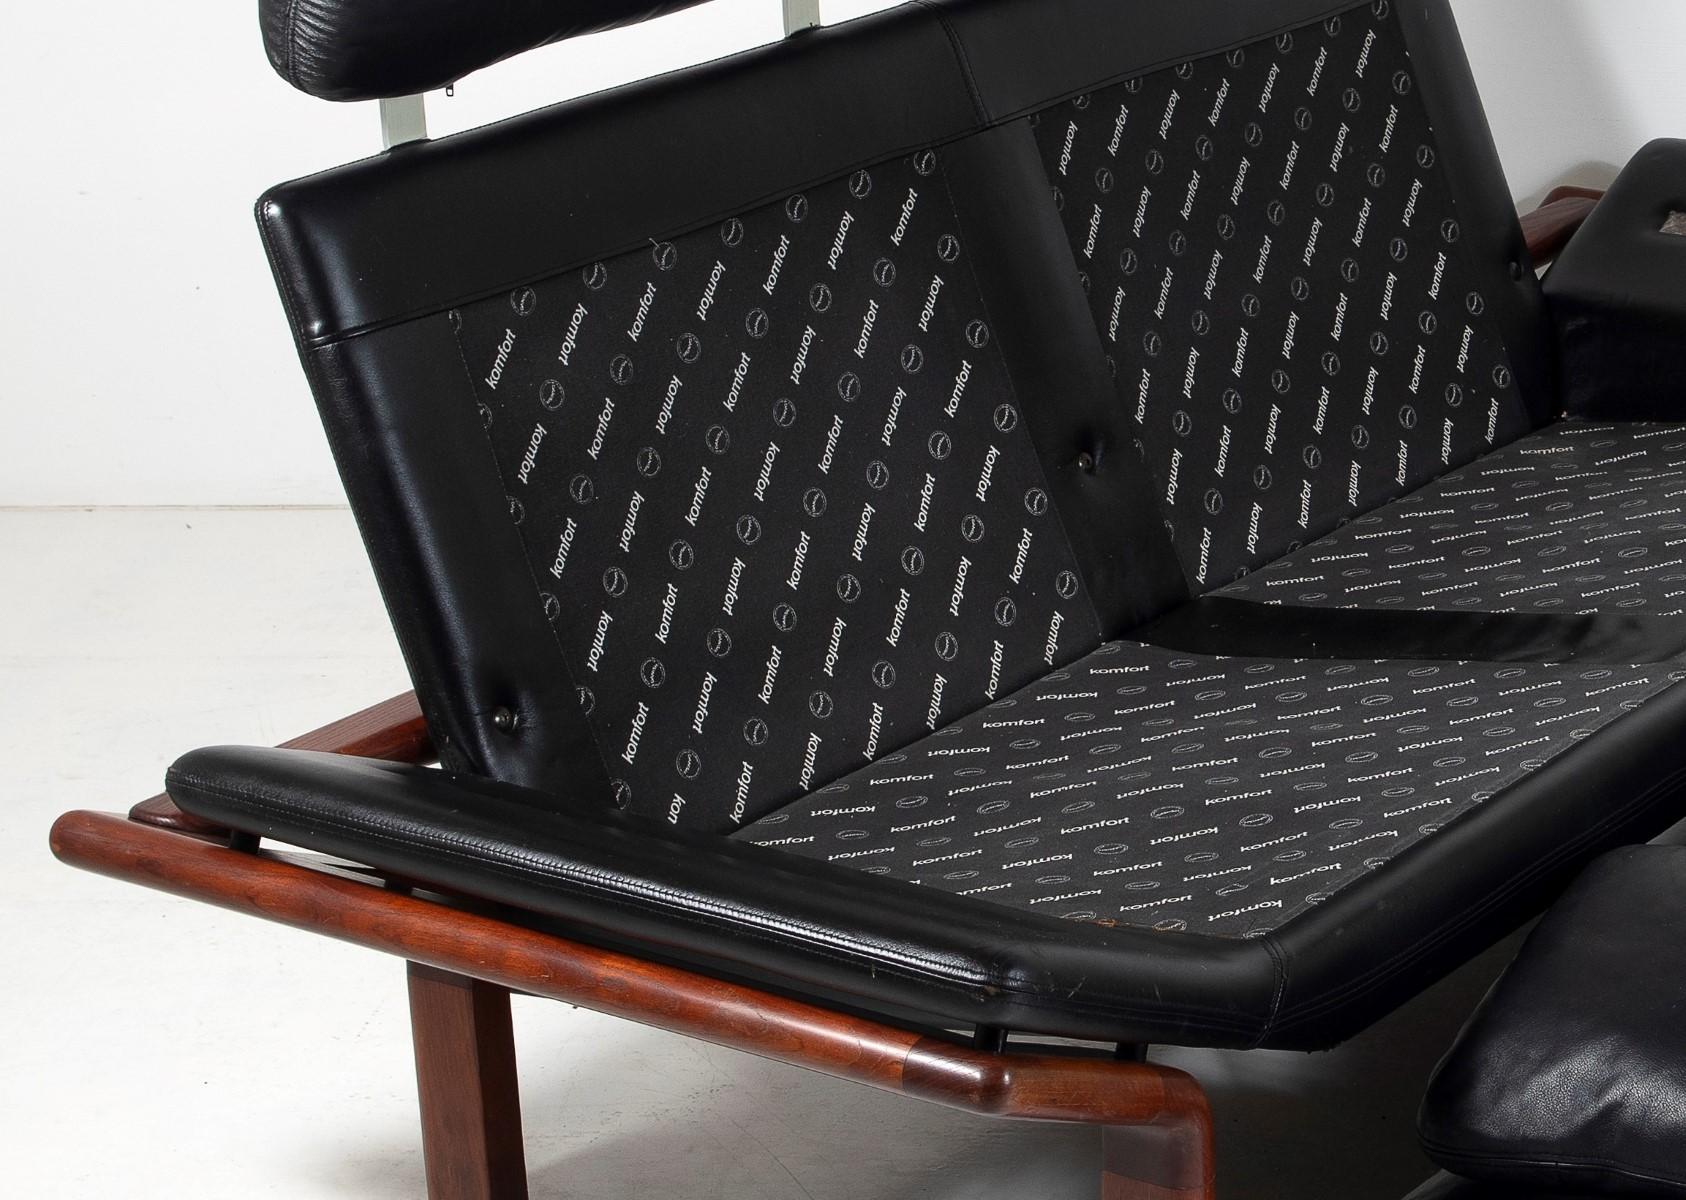 1960-70s Mid-Century Modern Danish Black Leather and Teak Sofa by Komfort For Sale 10